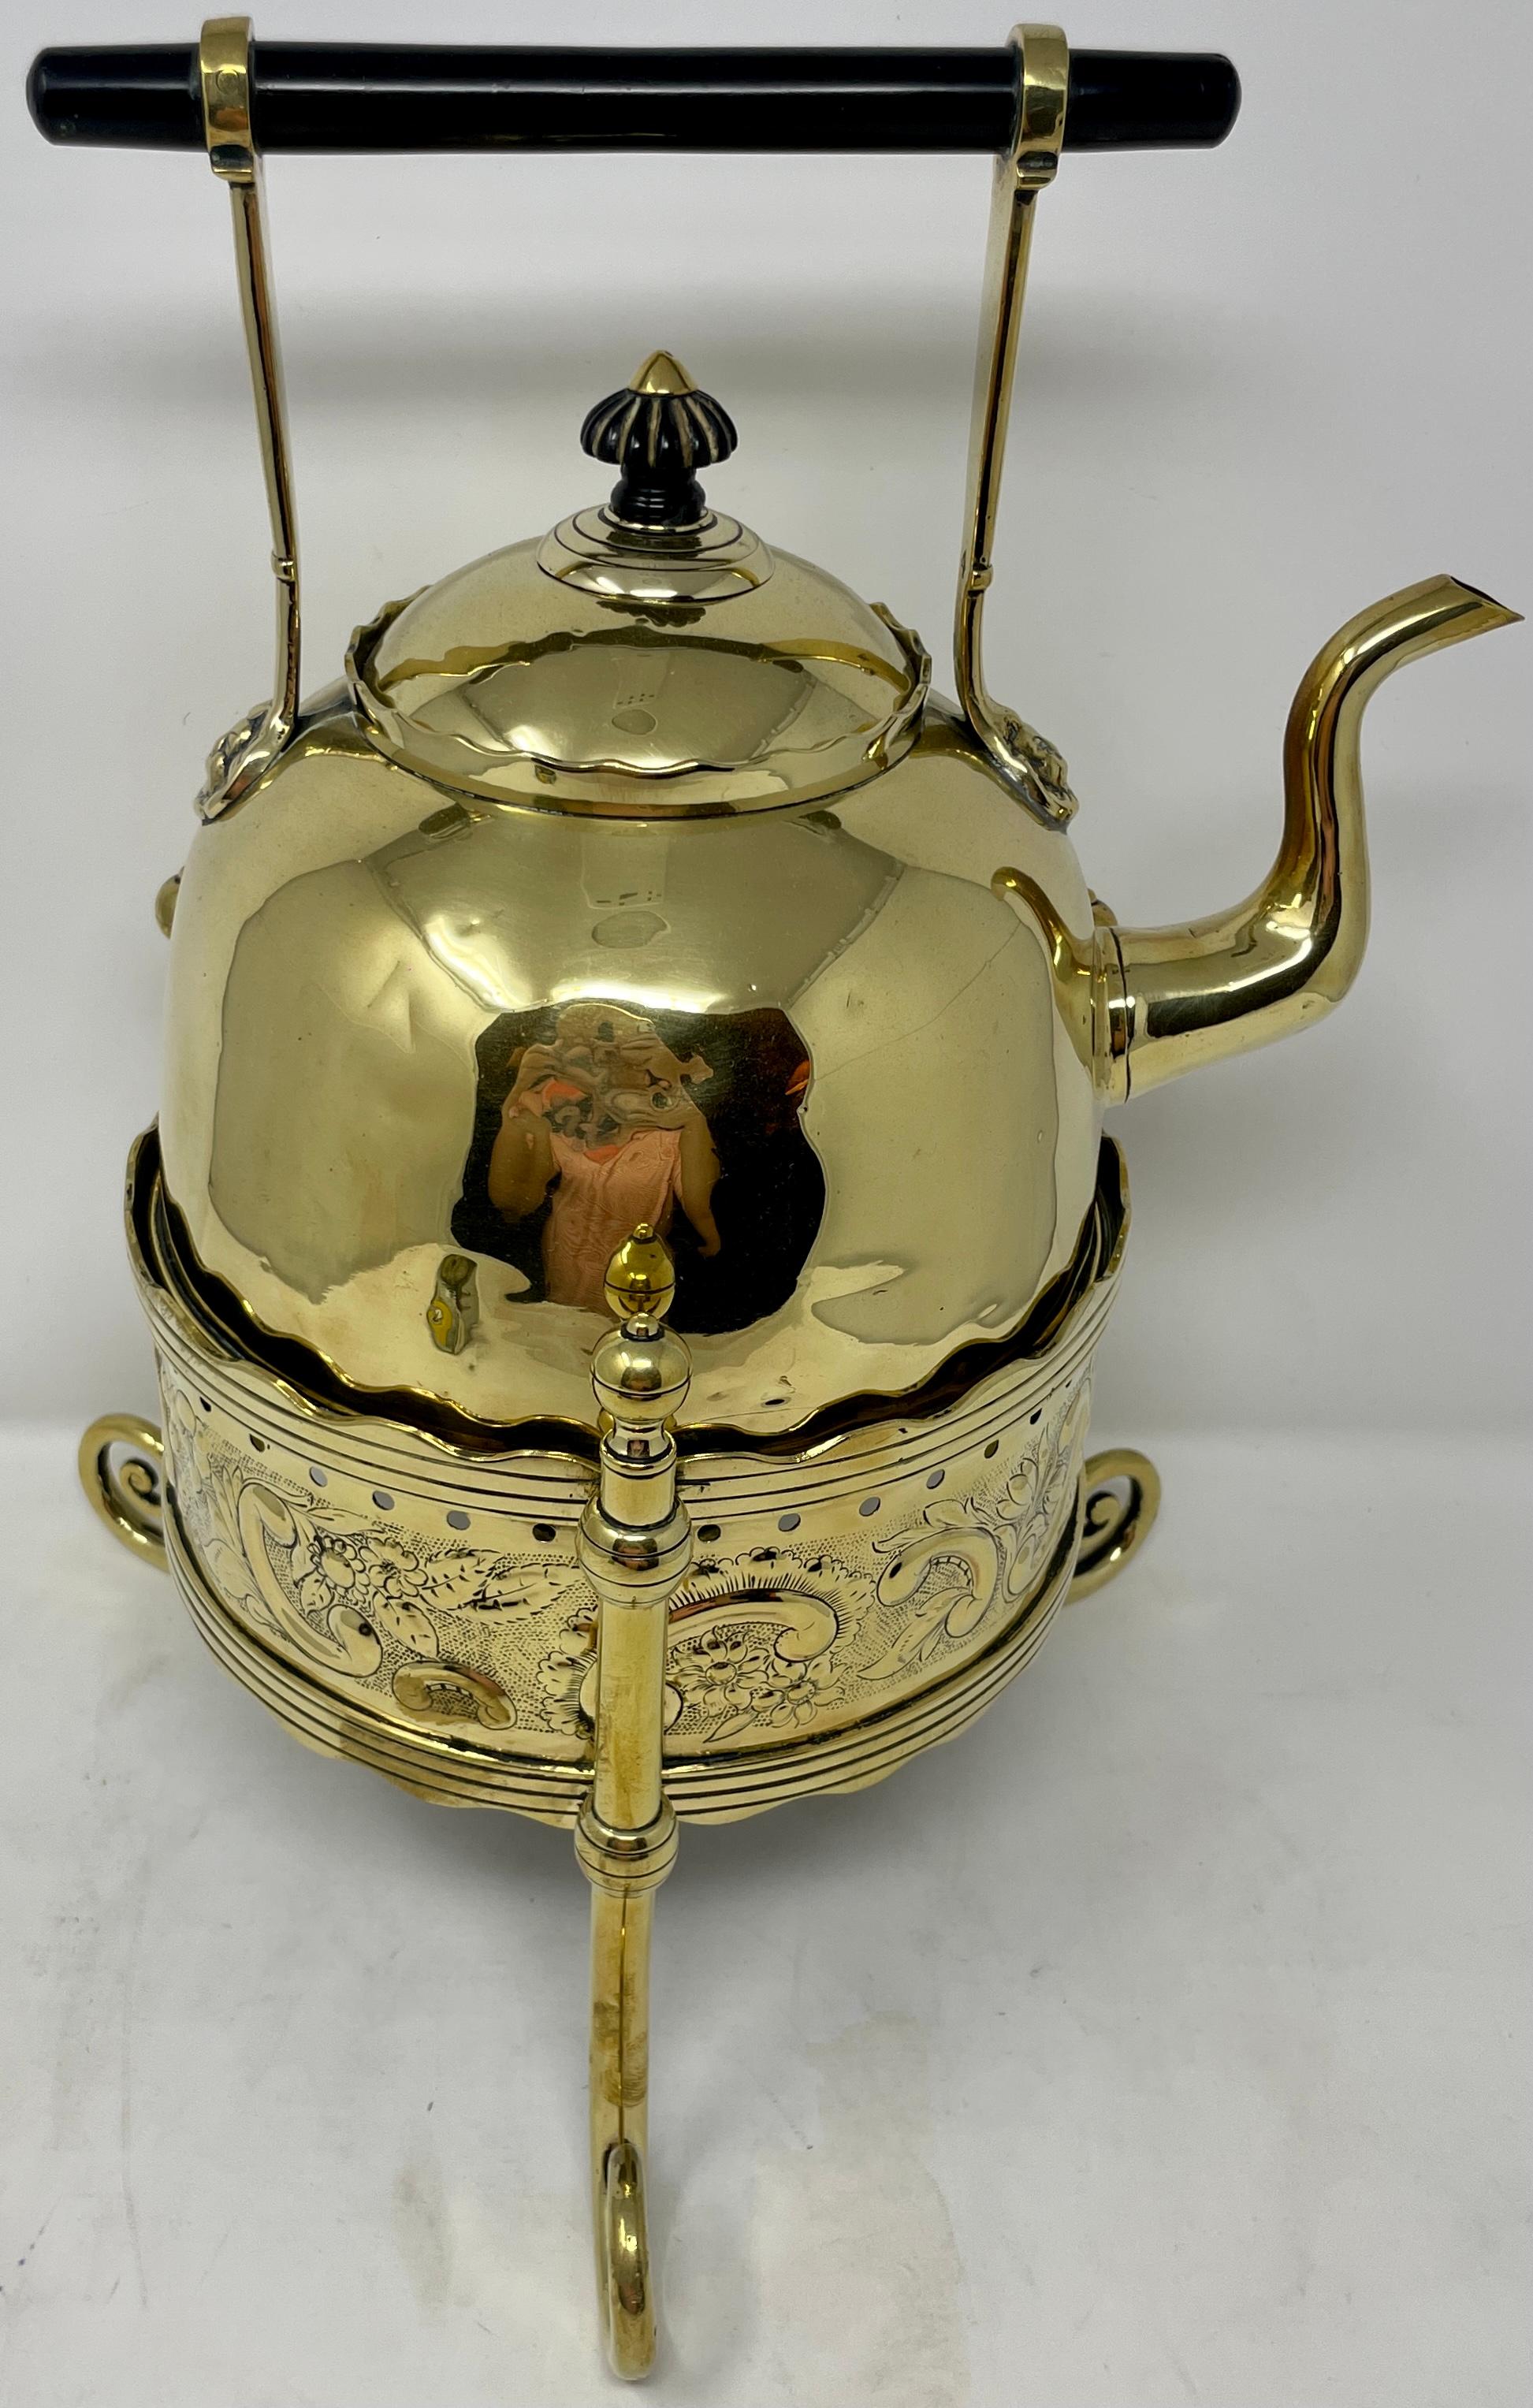 Antique English brass tea kettle on stand, circa 1880.